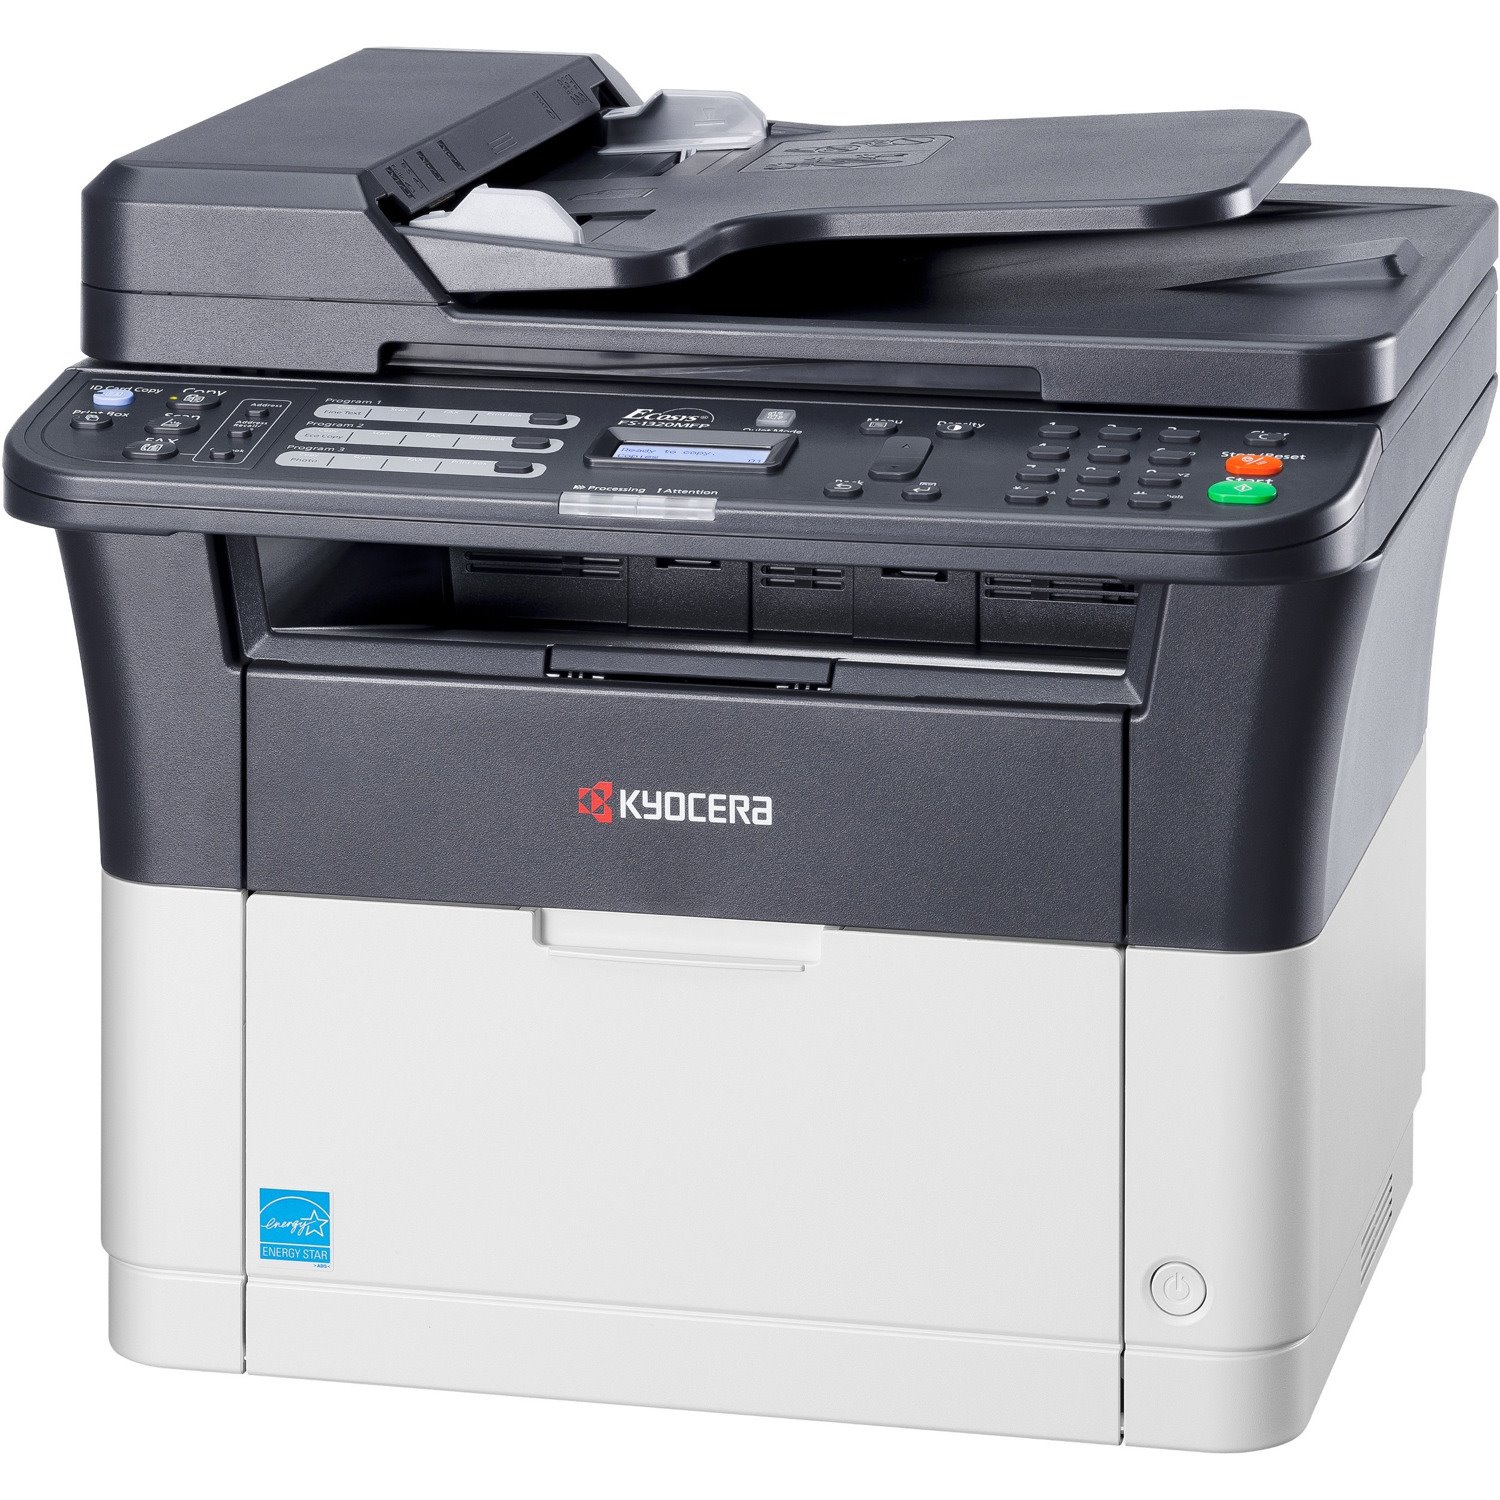 Kyocera Ecosys FS-1320MFP Laser Multifunction Printer - Monochrome